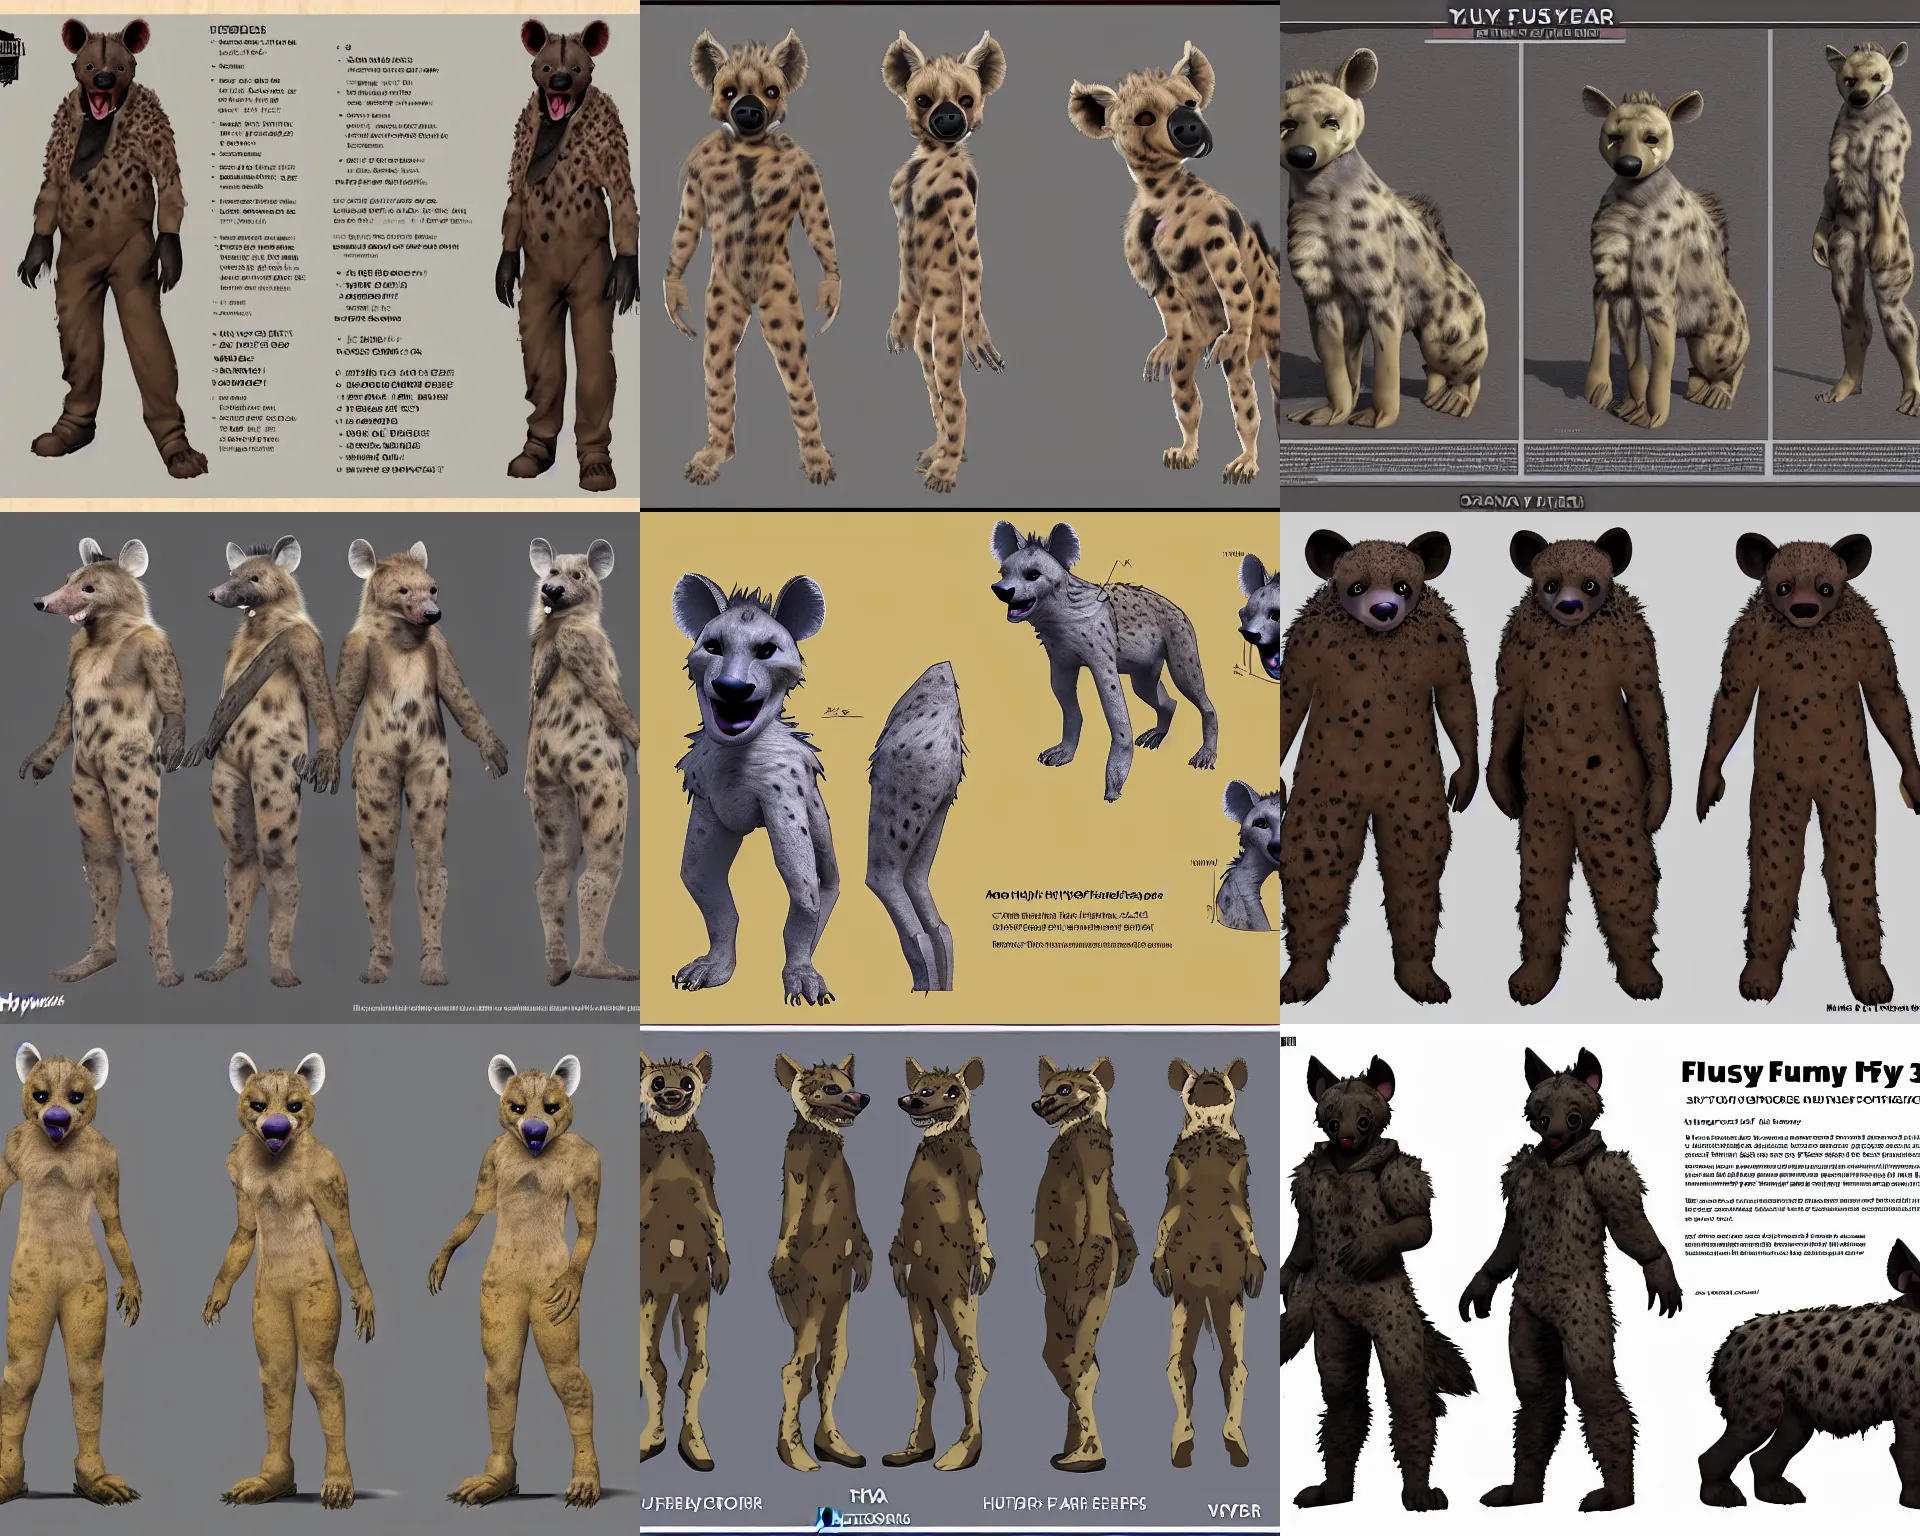 Prompt: a furry hyena fursona three - view fursuit reference sheet, insane ultrahigh - resolution ( uhd ), trending on weasyl